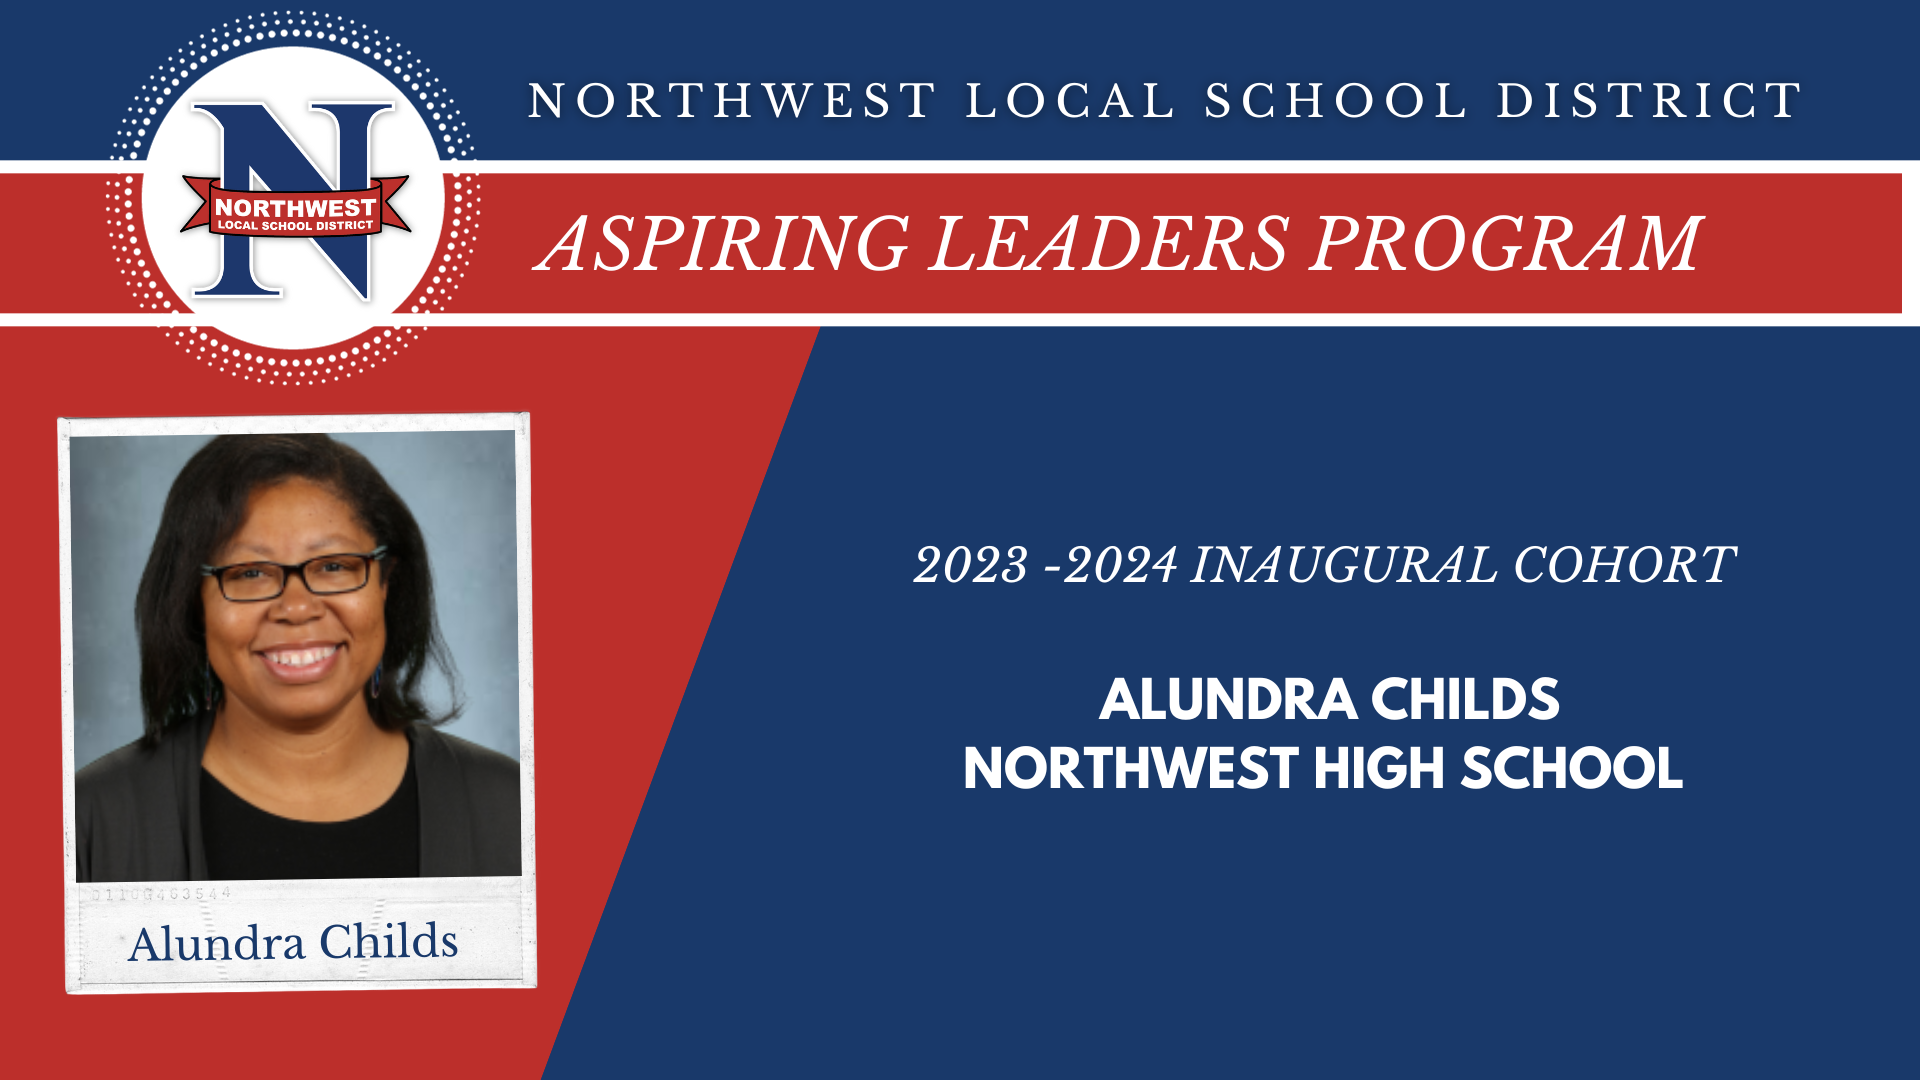 Northwest Local School District Aspiring Leaders Program 2023-24 Inaugural Cohort Alundra Childs - Northwest High School